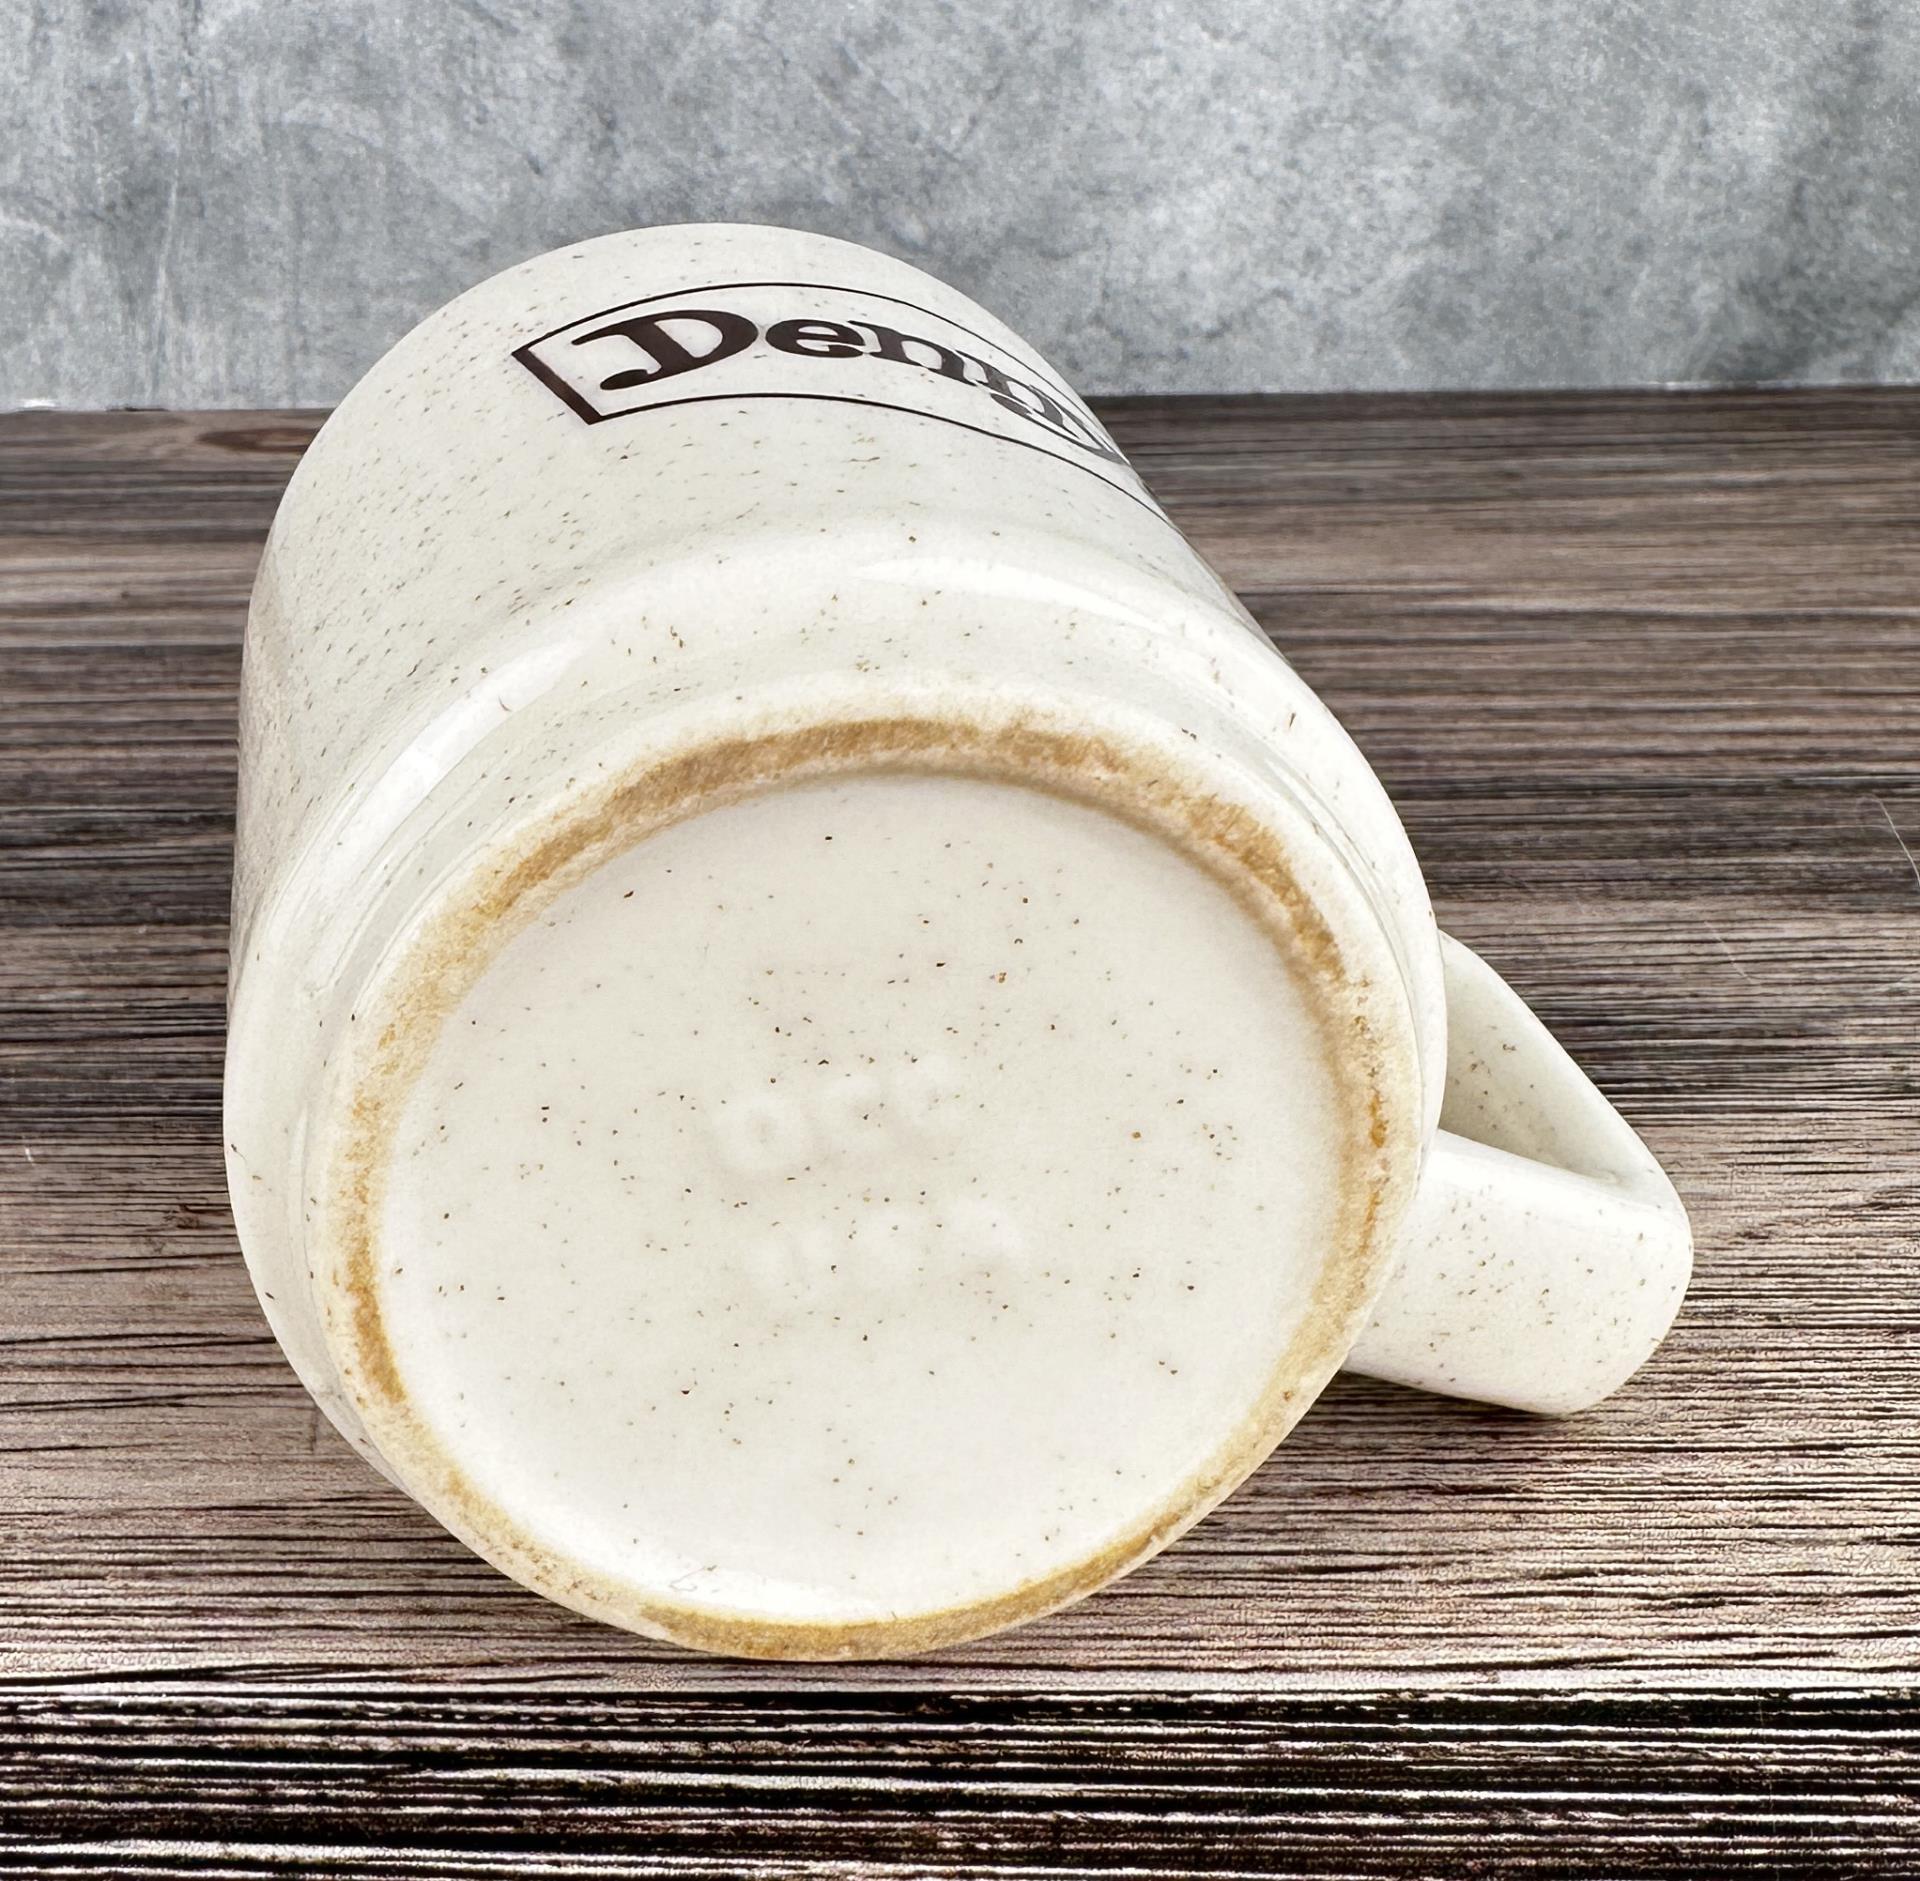 Vintage Denny's Restaurant Ware Coffee Mug